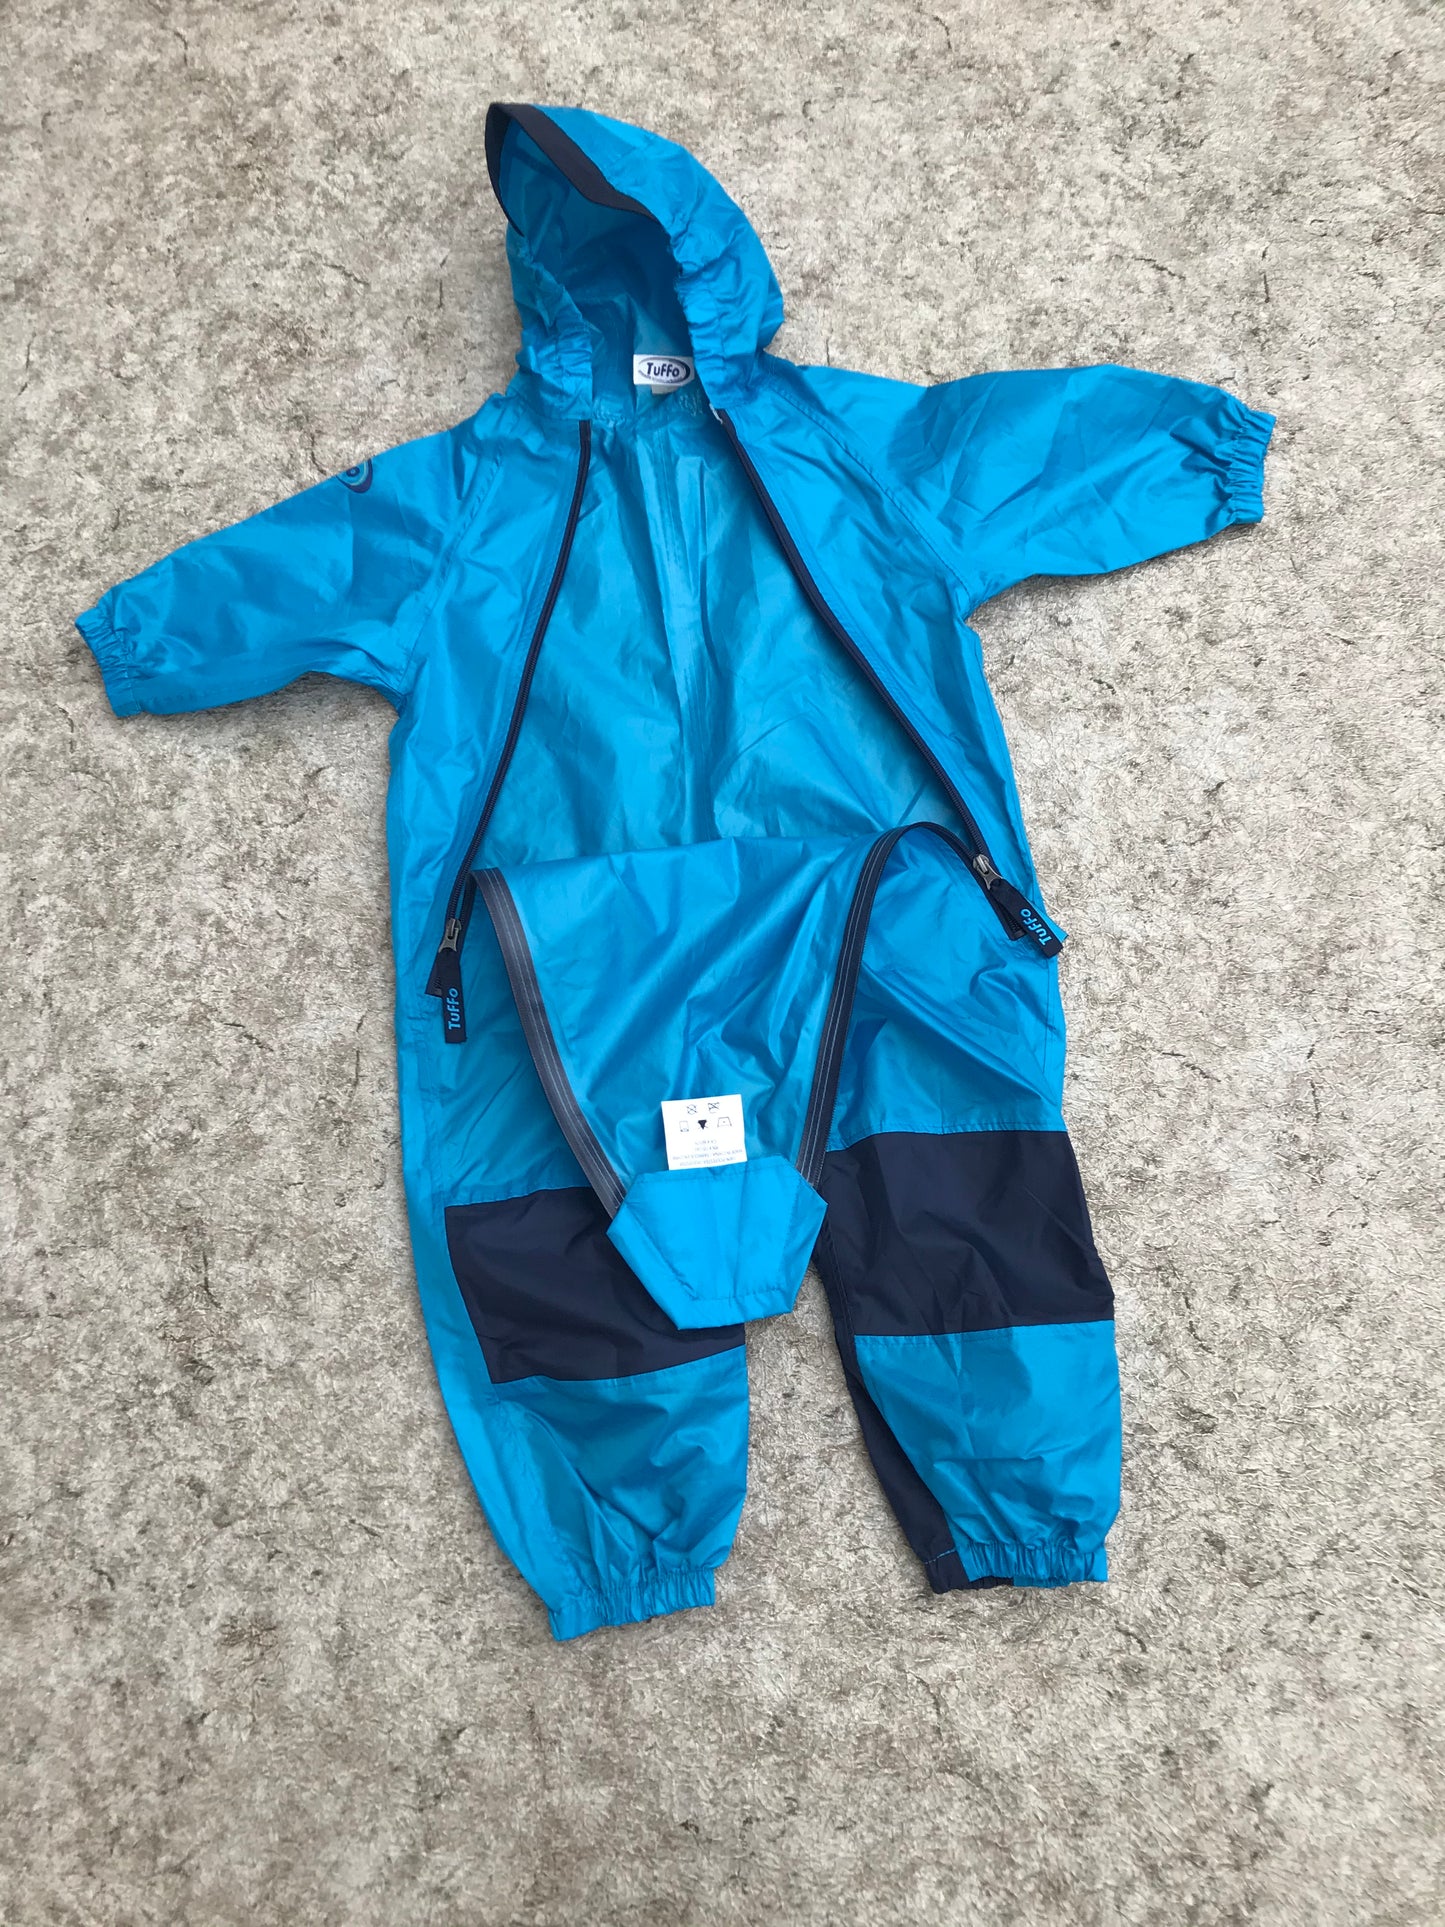 Rain Suit Child Size 2 Muddy Buddy Tuffo Pants Coat Blue New Demo Model